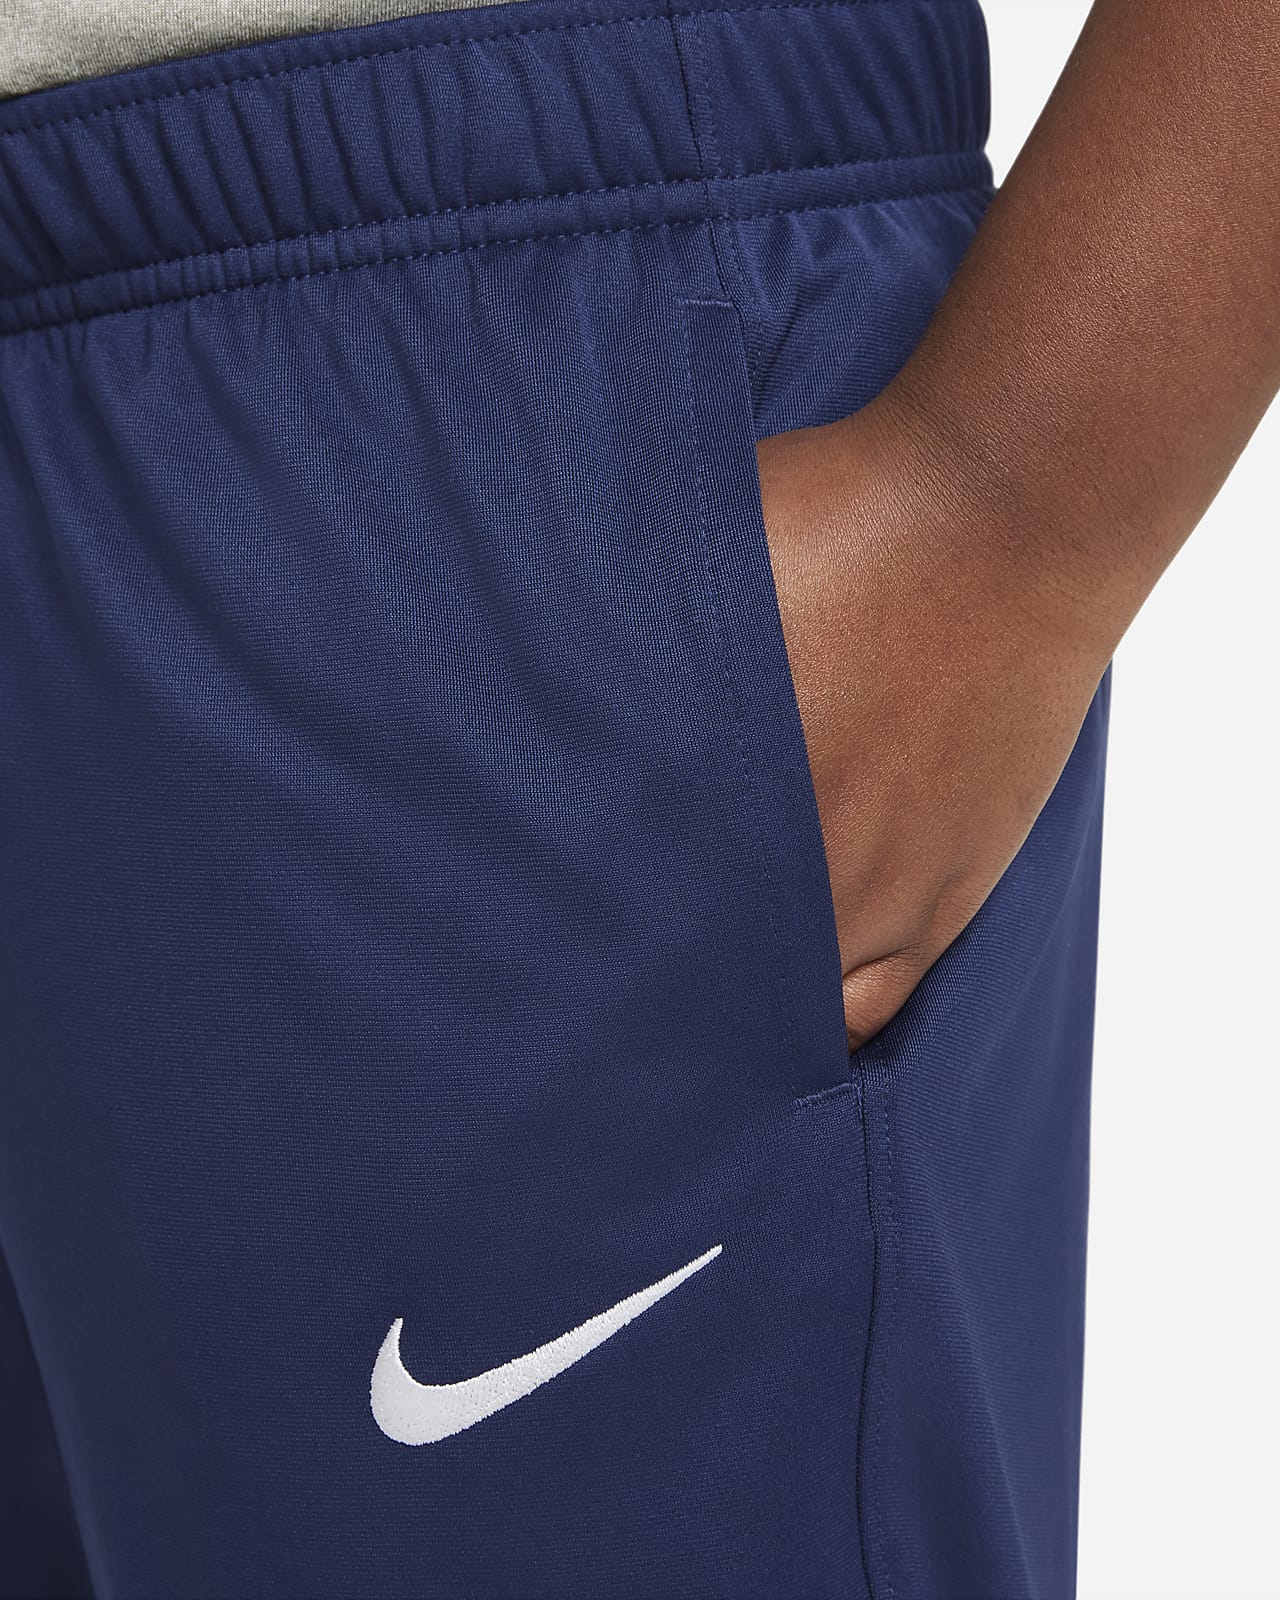 Nike Sport Big Kids' (Boys') Training Pants (Extended Size). Nike.com